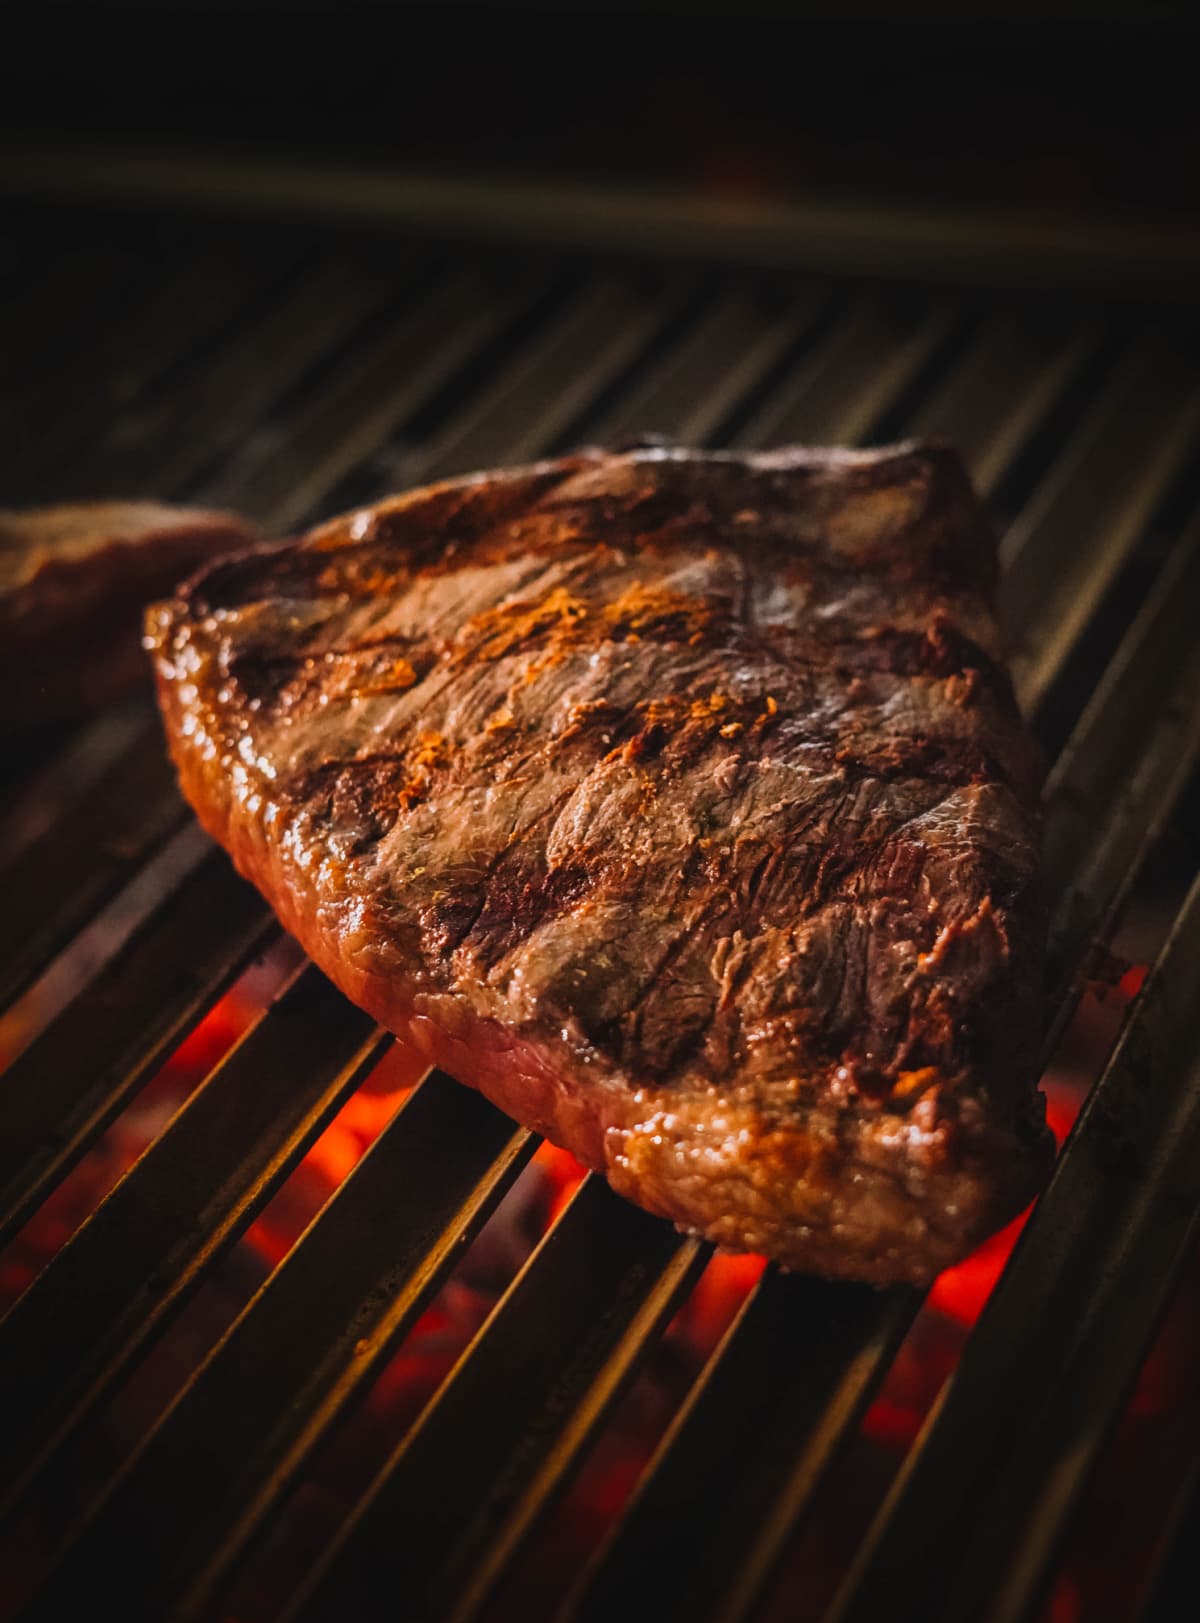 Closeup of steak on grill